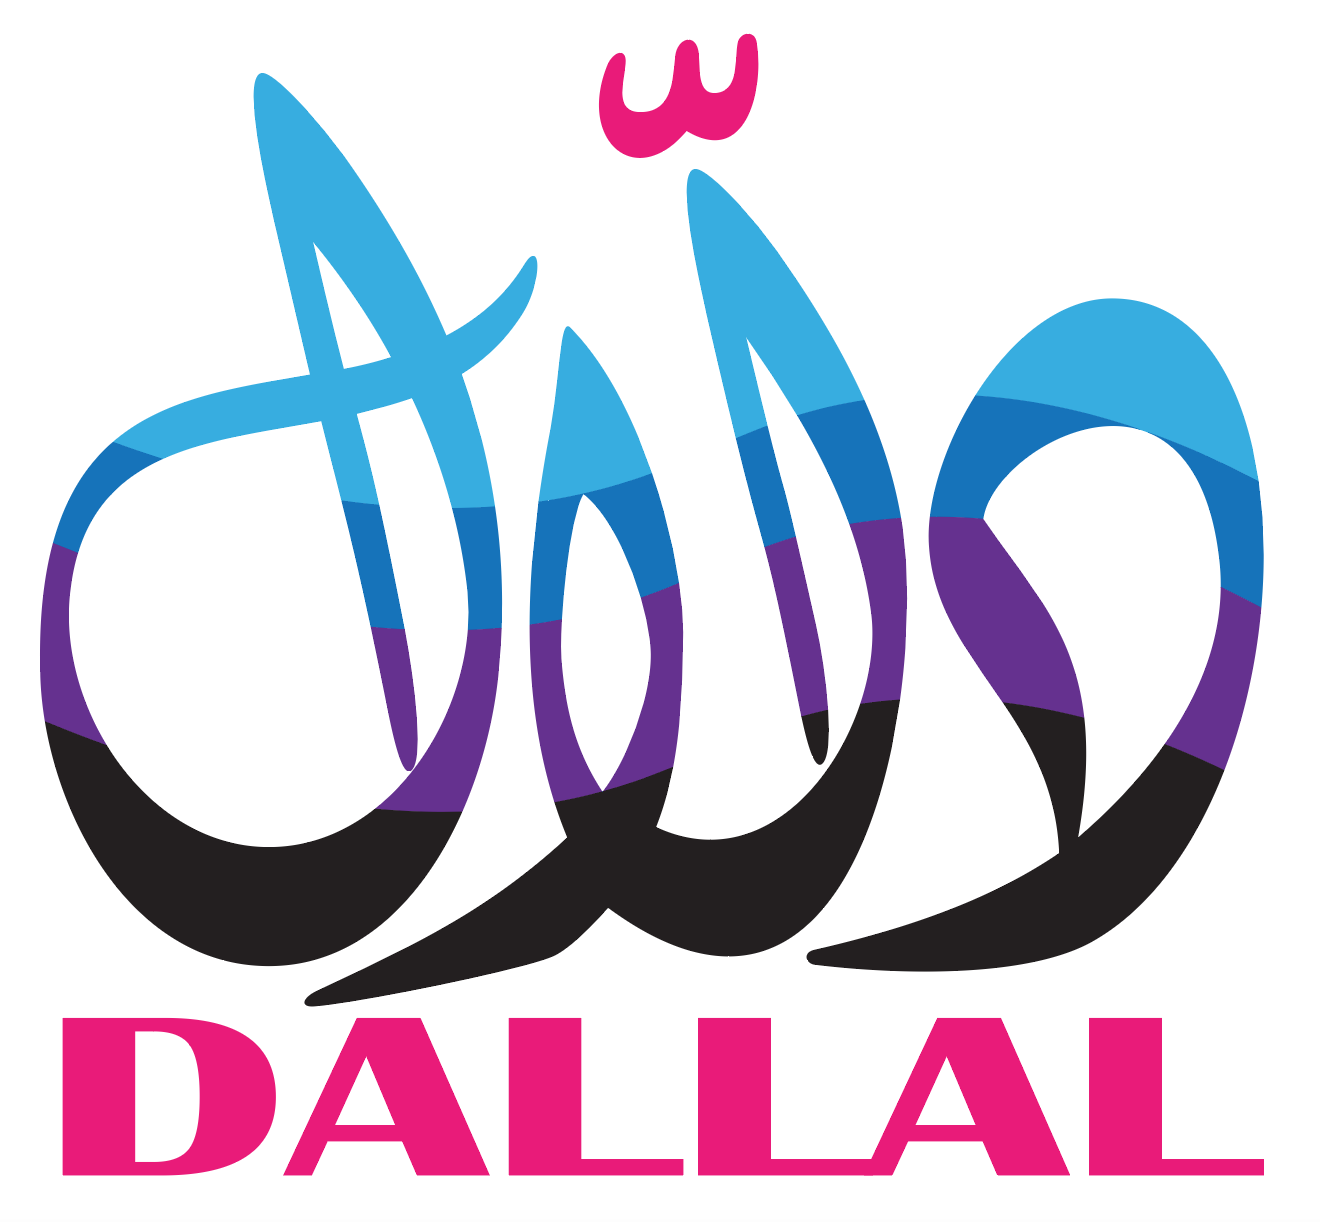 DALLAL - Premium Arabic Domain Names